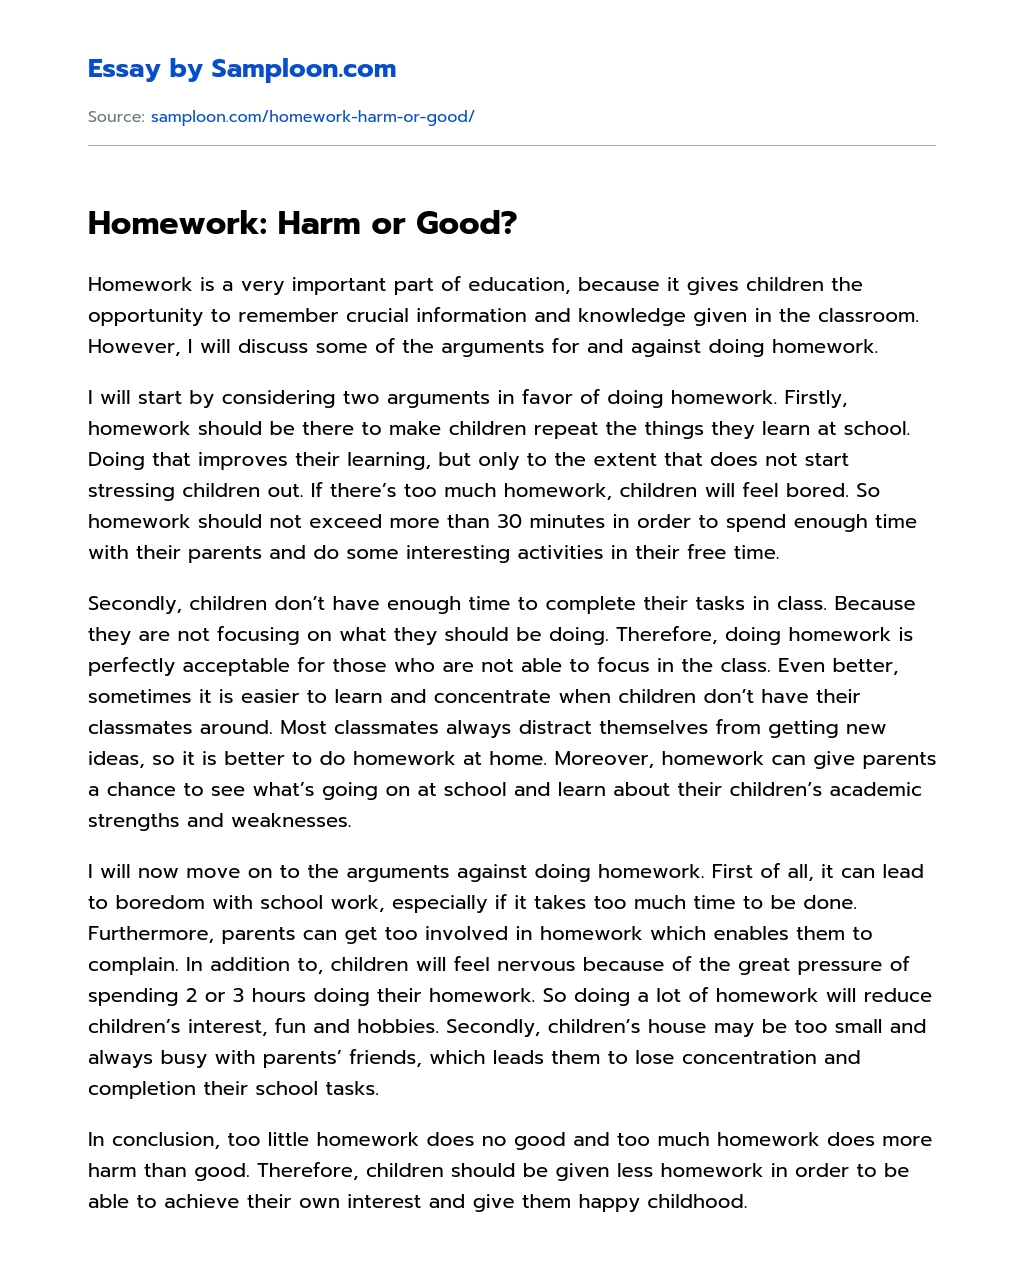 homework helpful or harmful essay